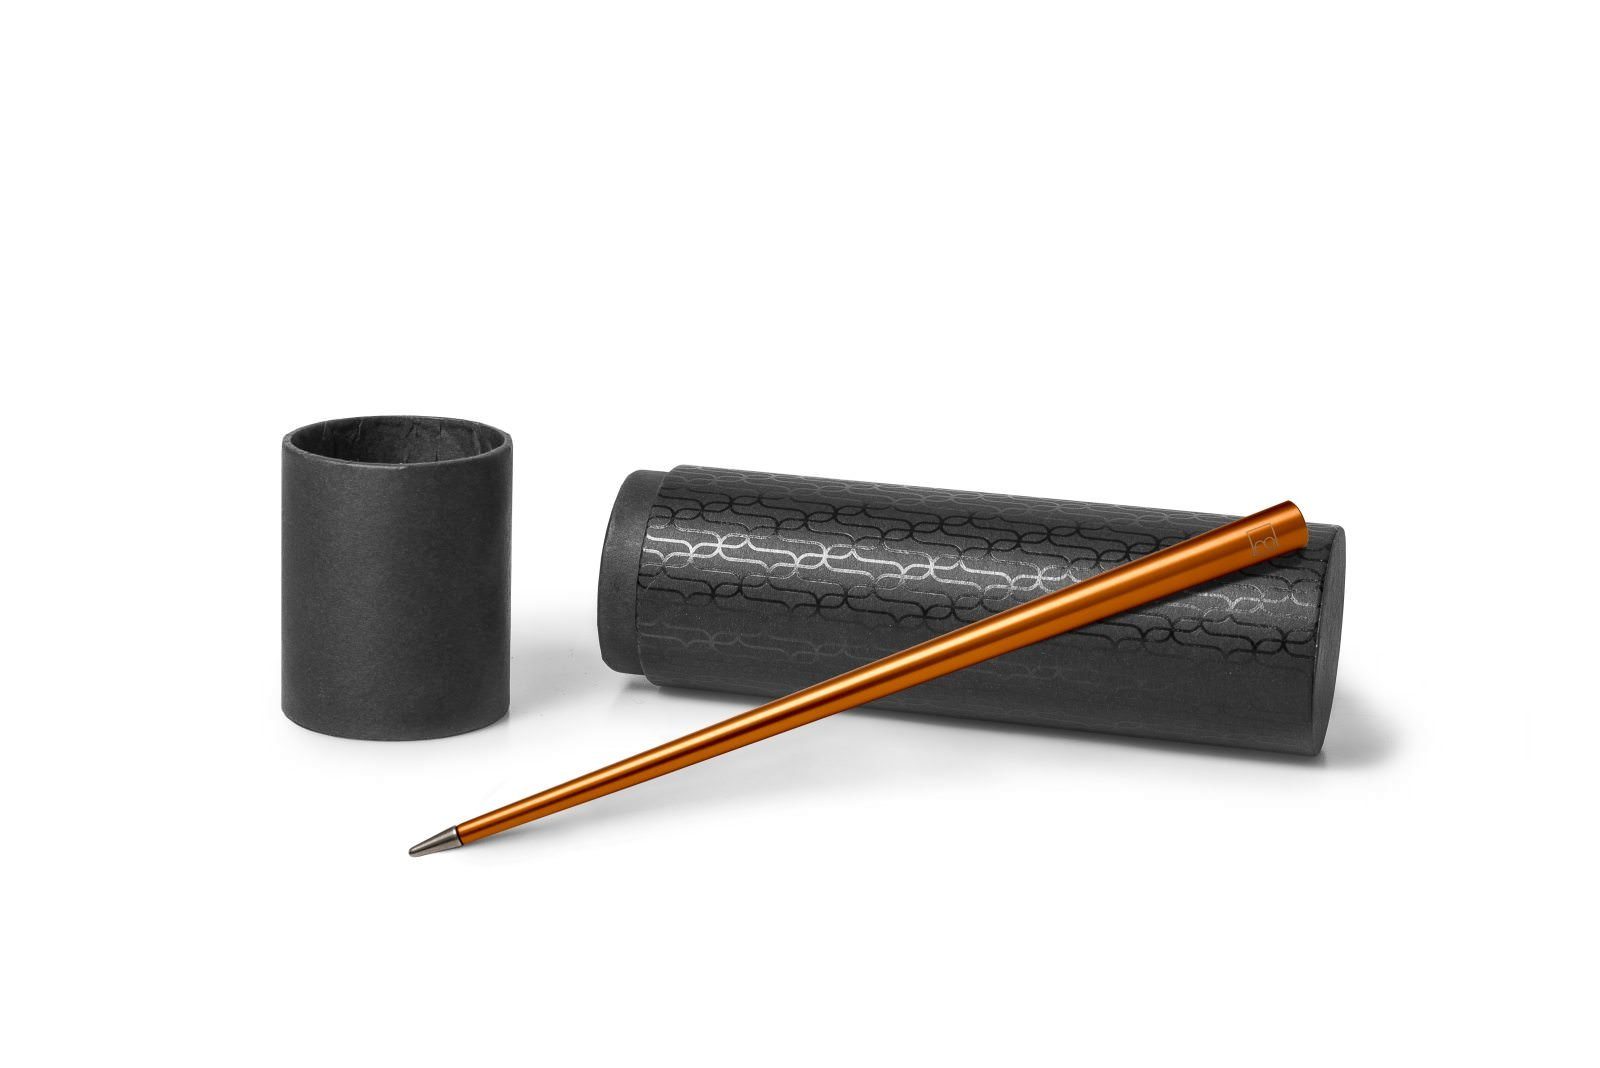 Napkin Stift, Ethergraf®-Spitze (kein New Set) Bleistift Forever Pininfarina Schreibgerät Prima Rust